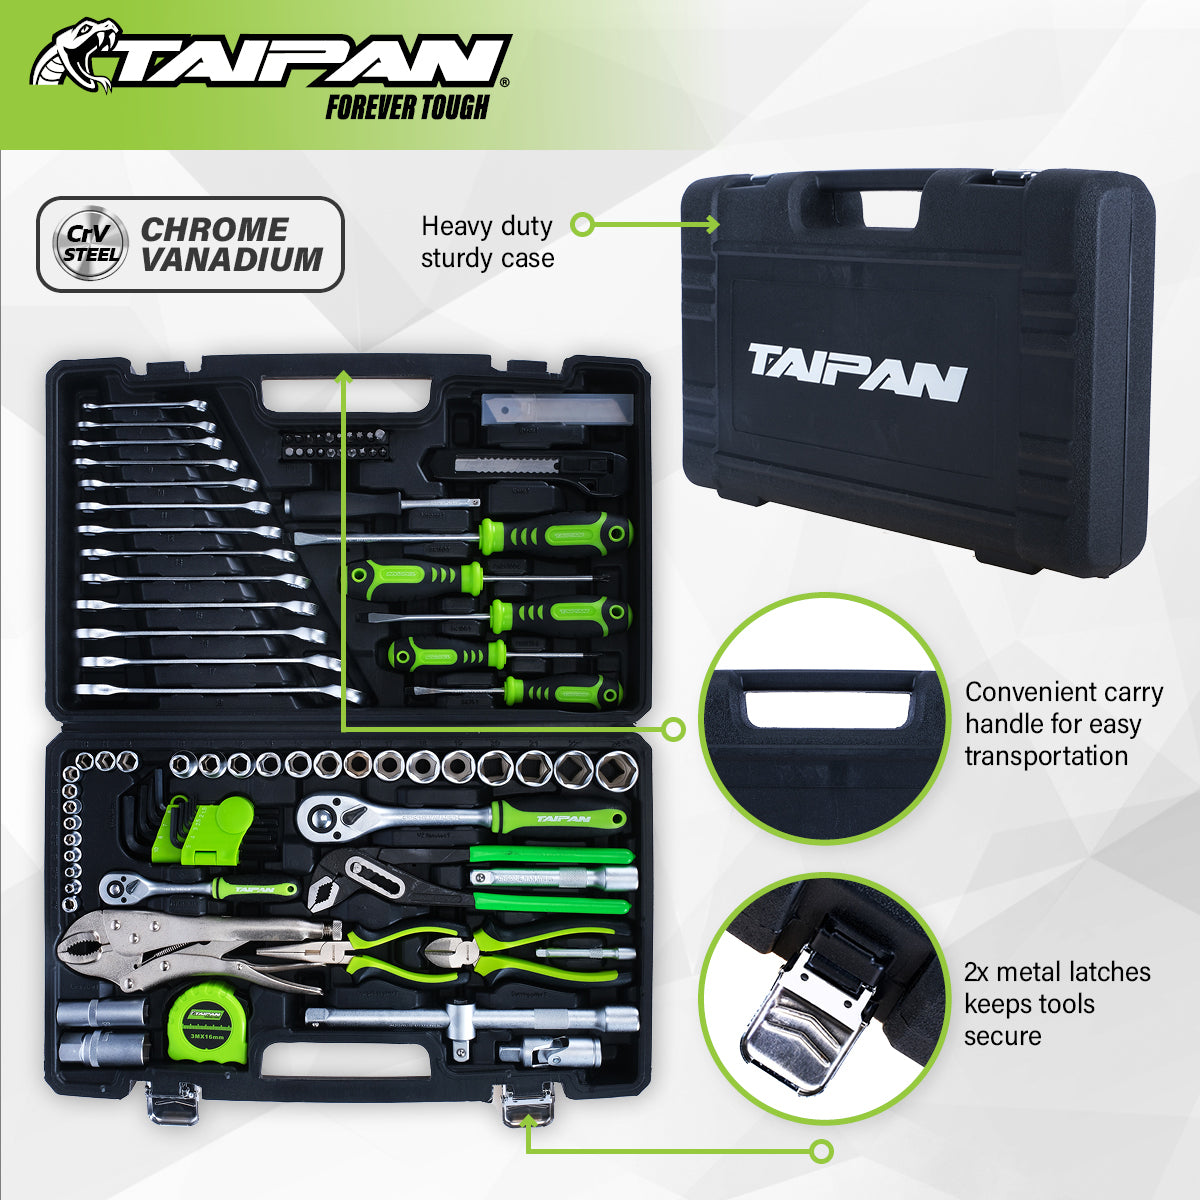 Taipan 100PCE Home Auto Premium Quality Tool Set Case Chrome Vanadium Steel Deals499